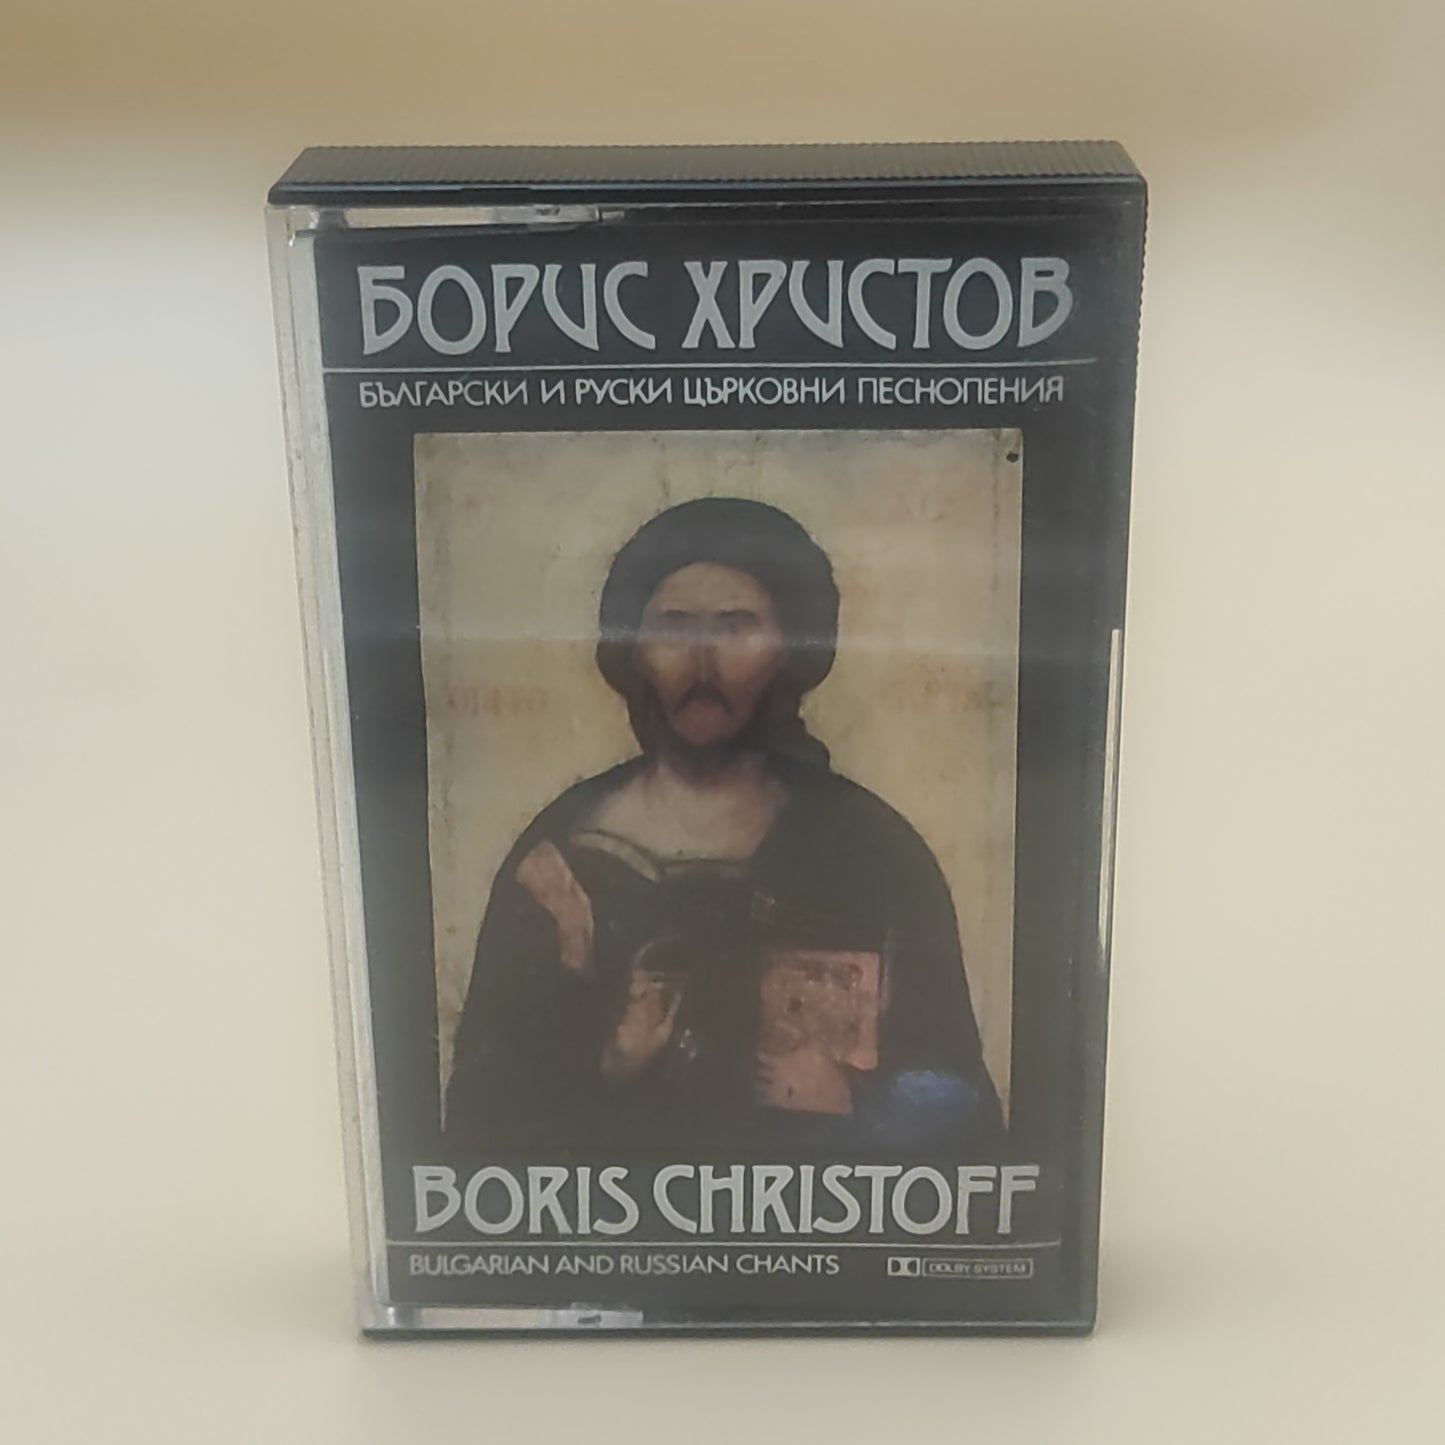 Boris Christoff - Bugarian and Russian Chants